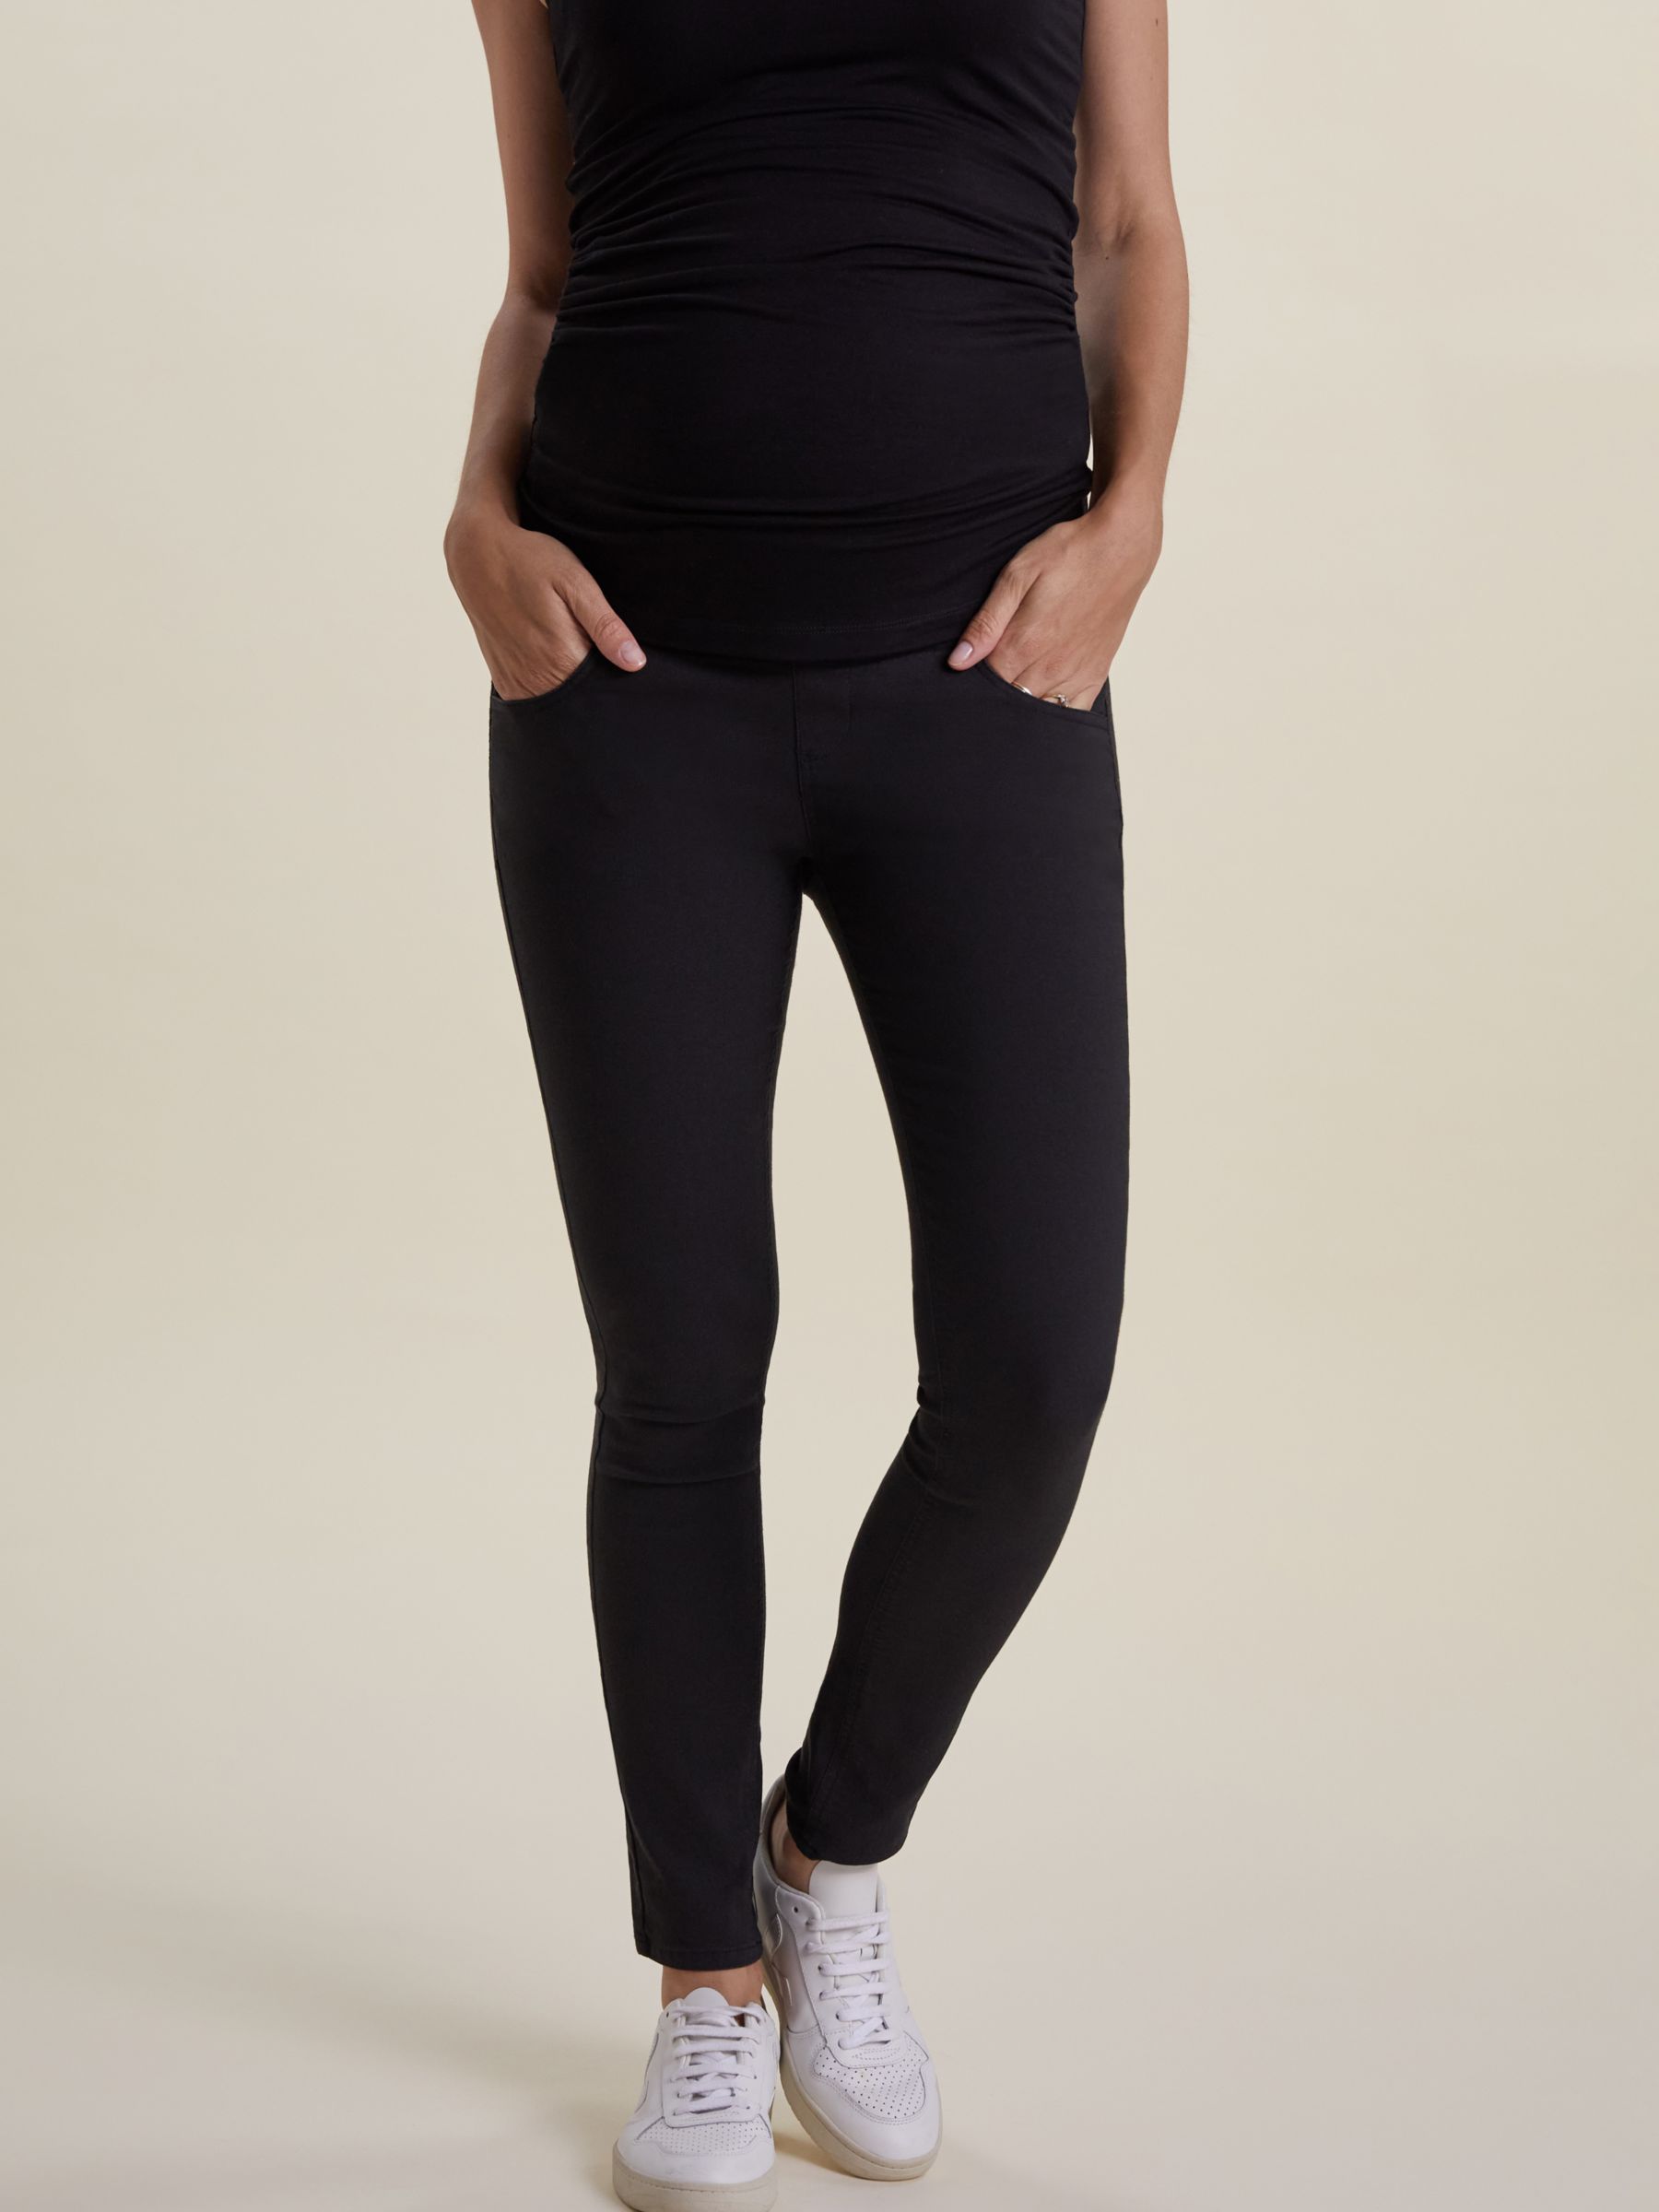 Isabella Oliver Stretch Maternity Skinny Jeans, Caviar Black, 4